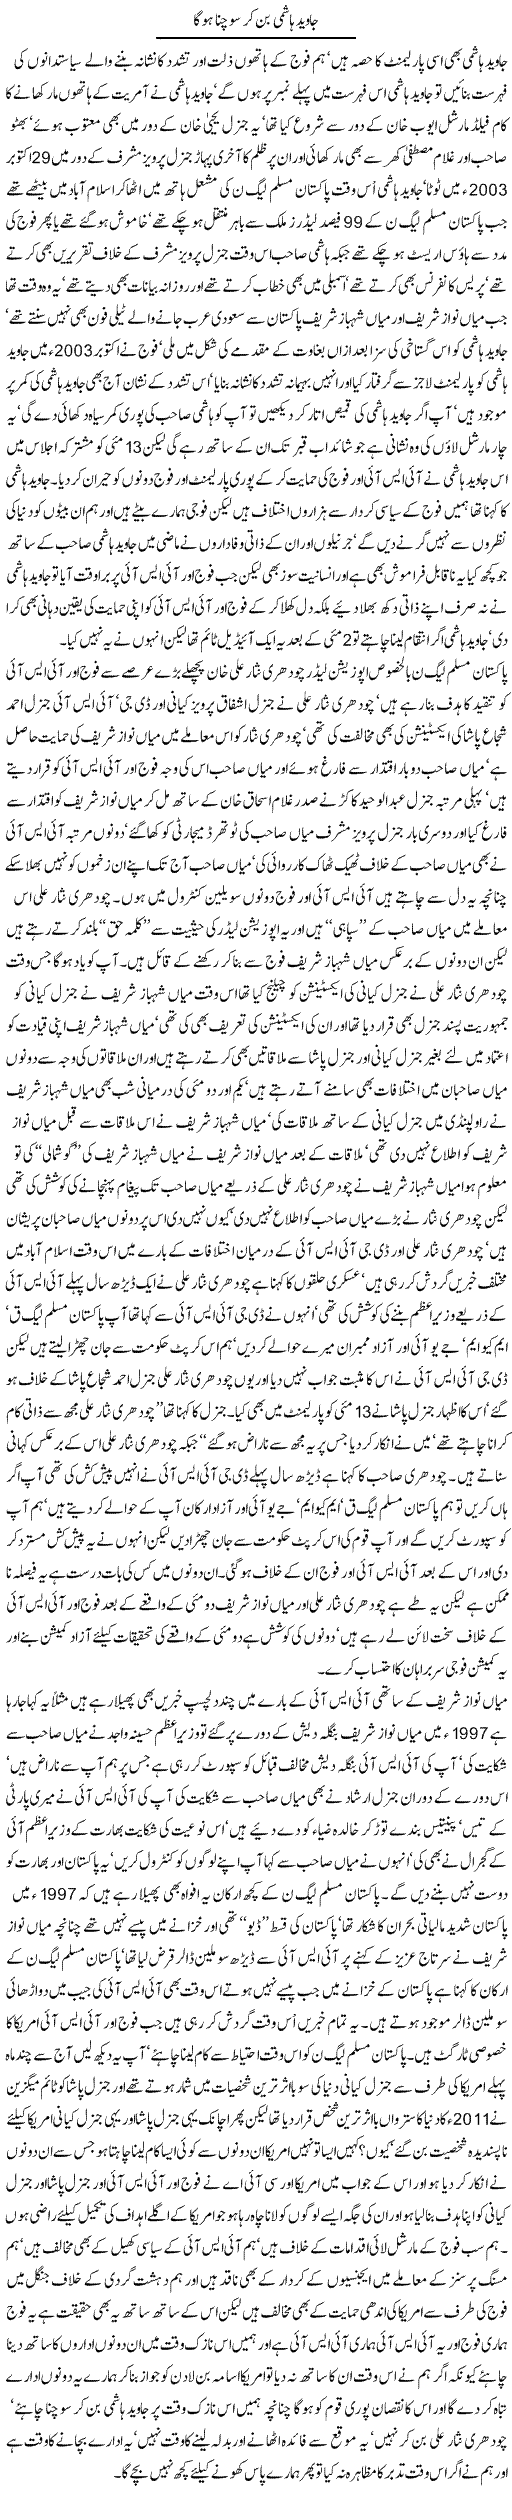 Javed Hashmi Express Column Javed Chaudhry 17 May 2011